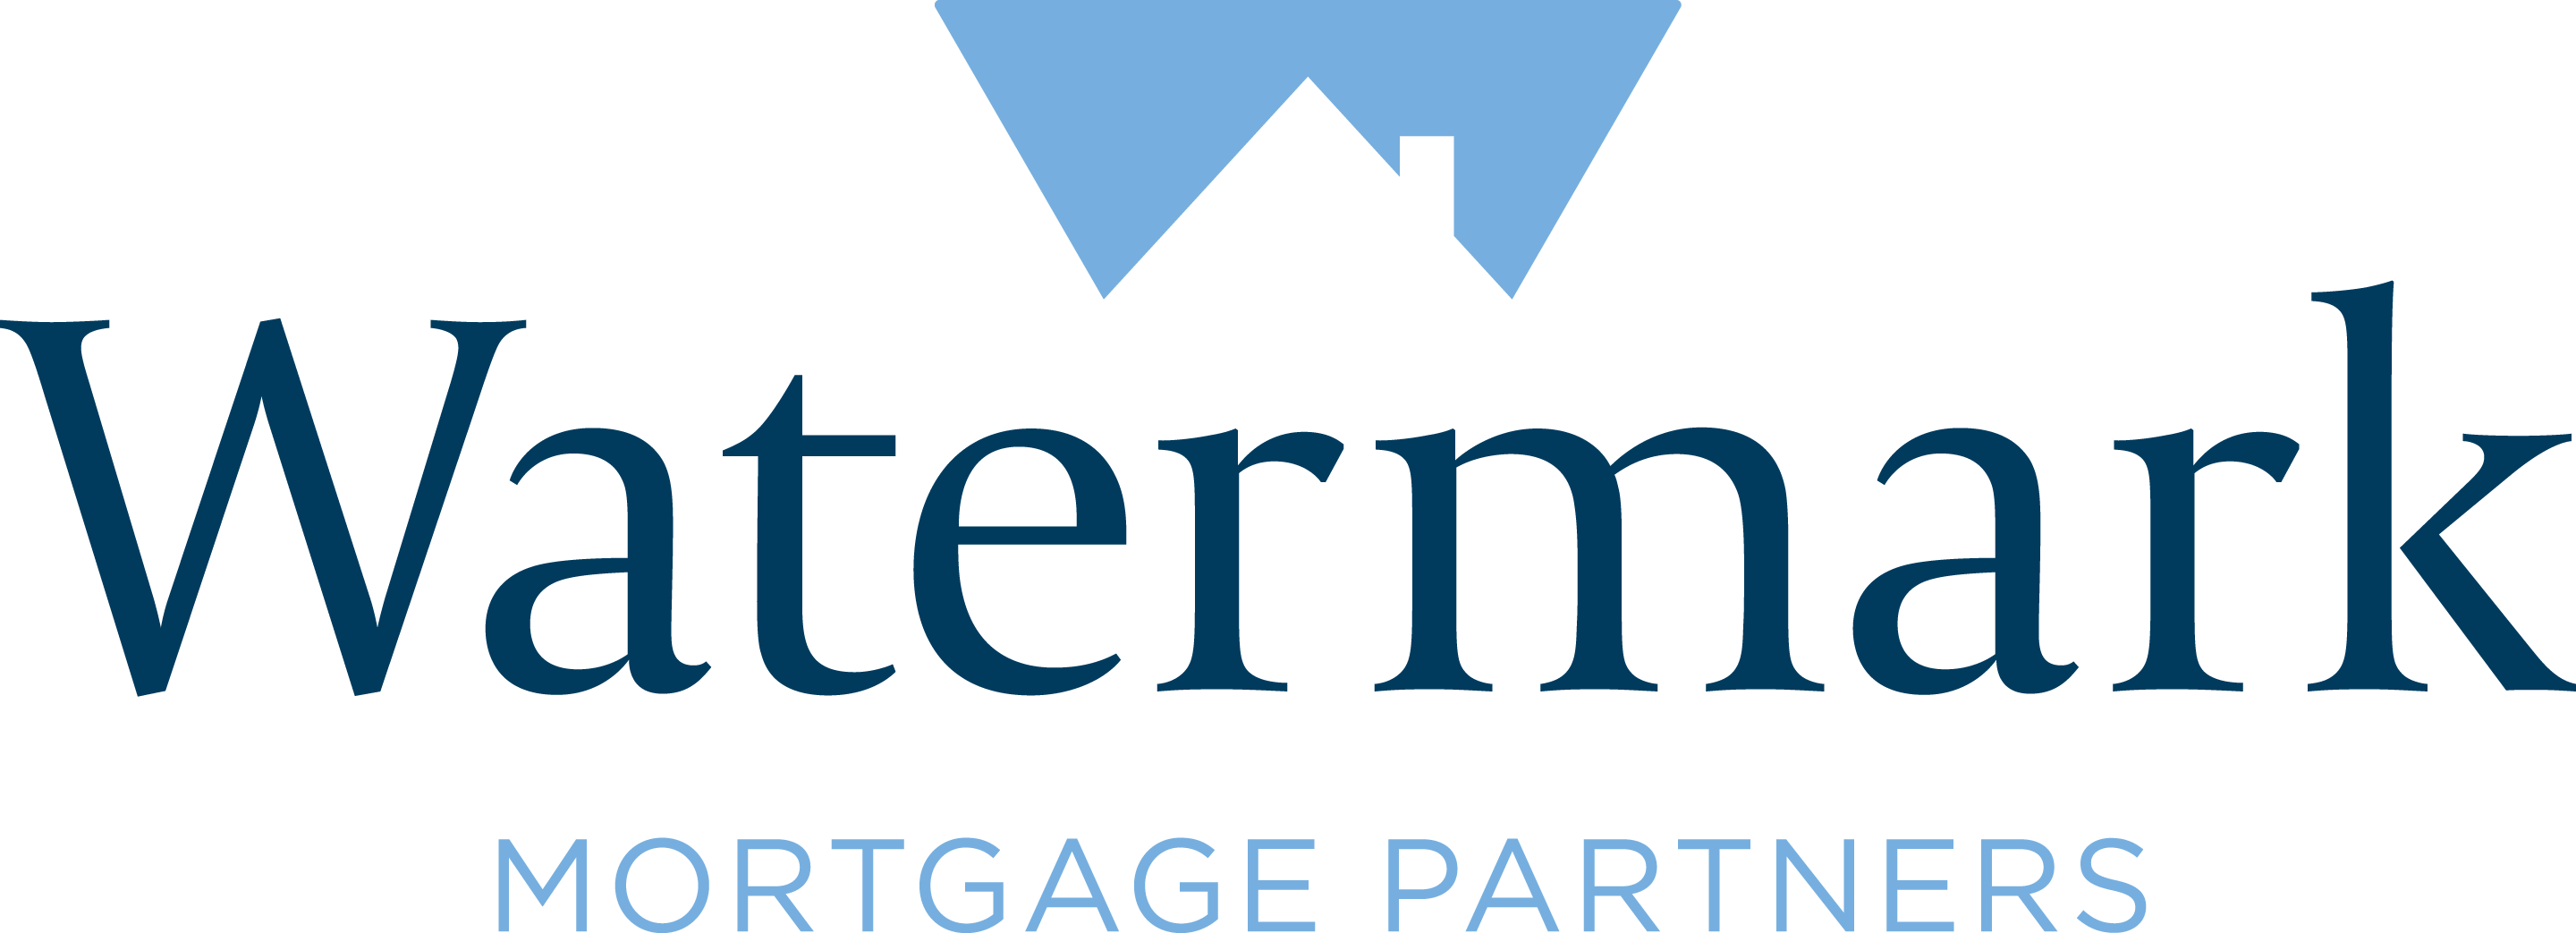 Watermark Mortgage Partners